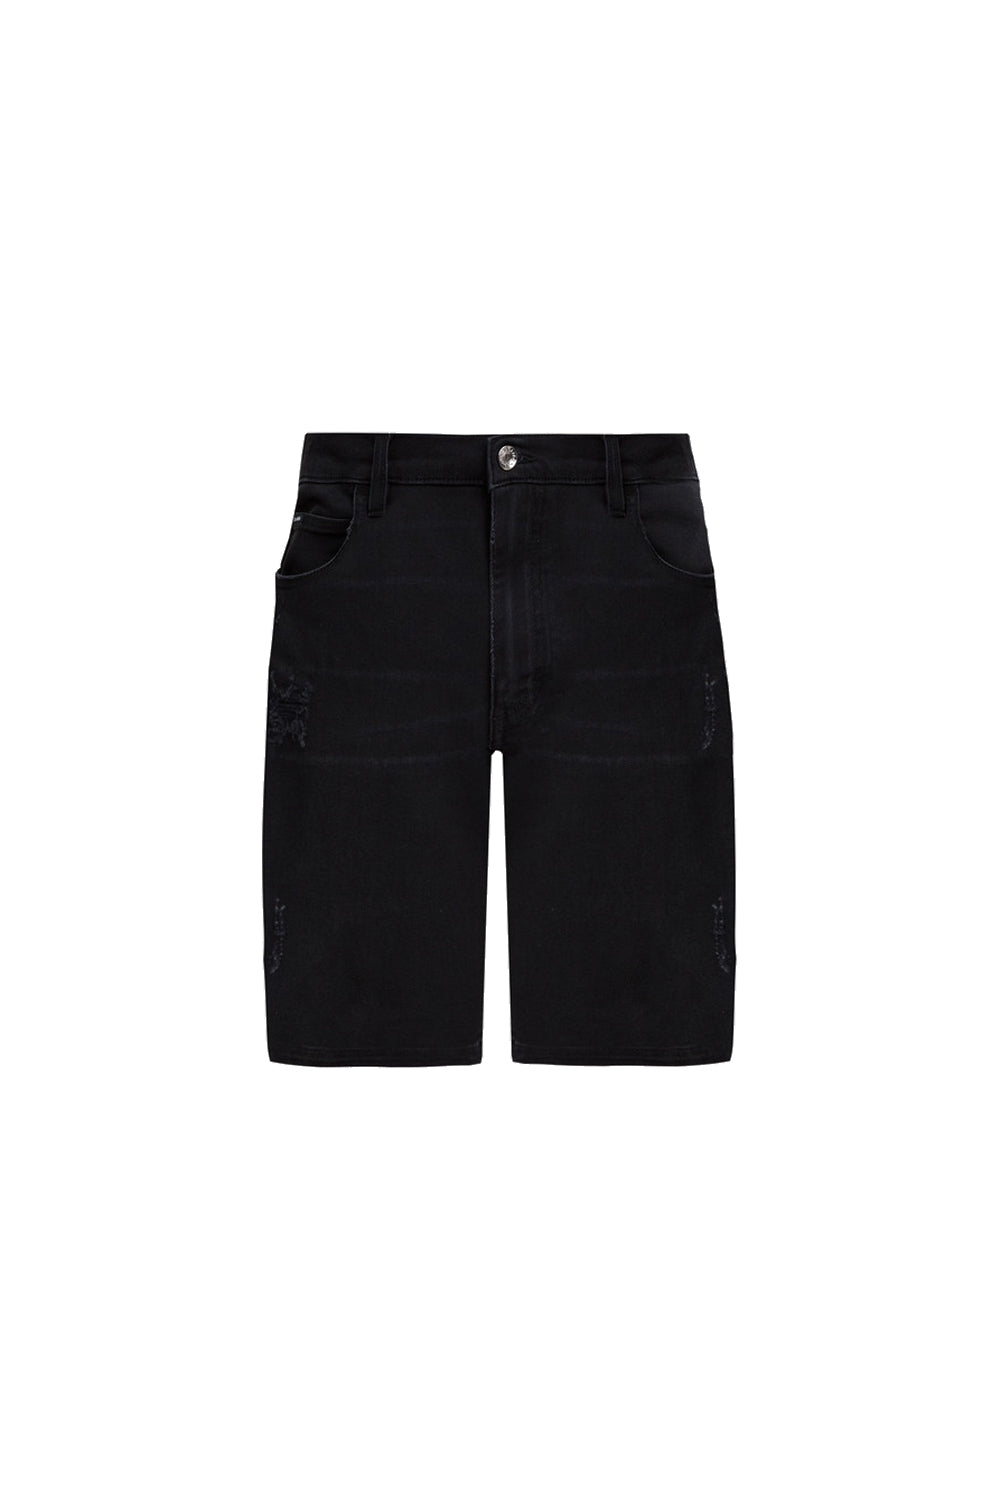 Dolce & Gabbana black short Jeans